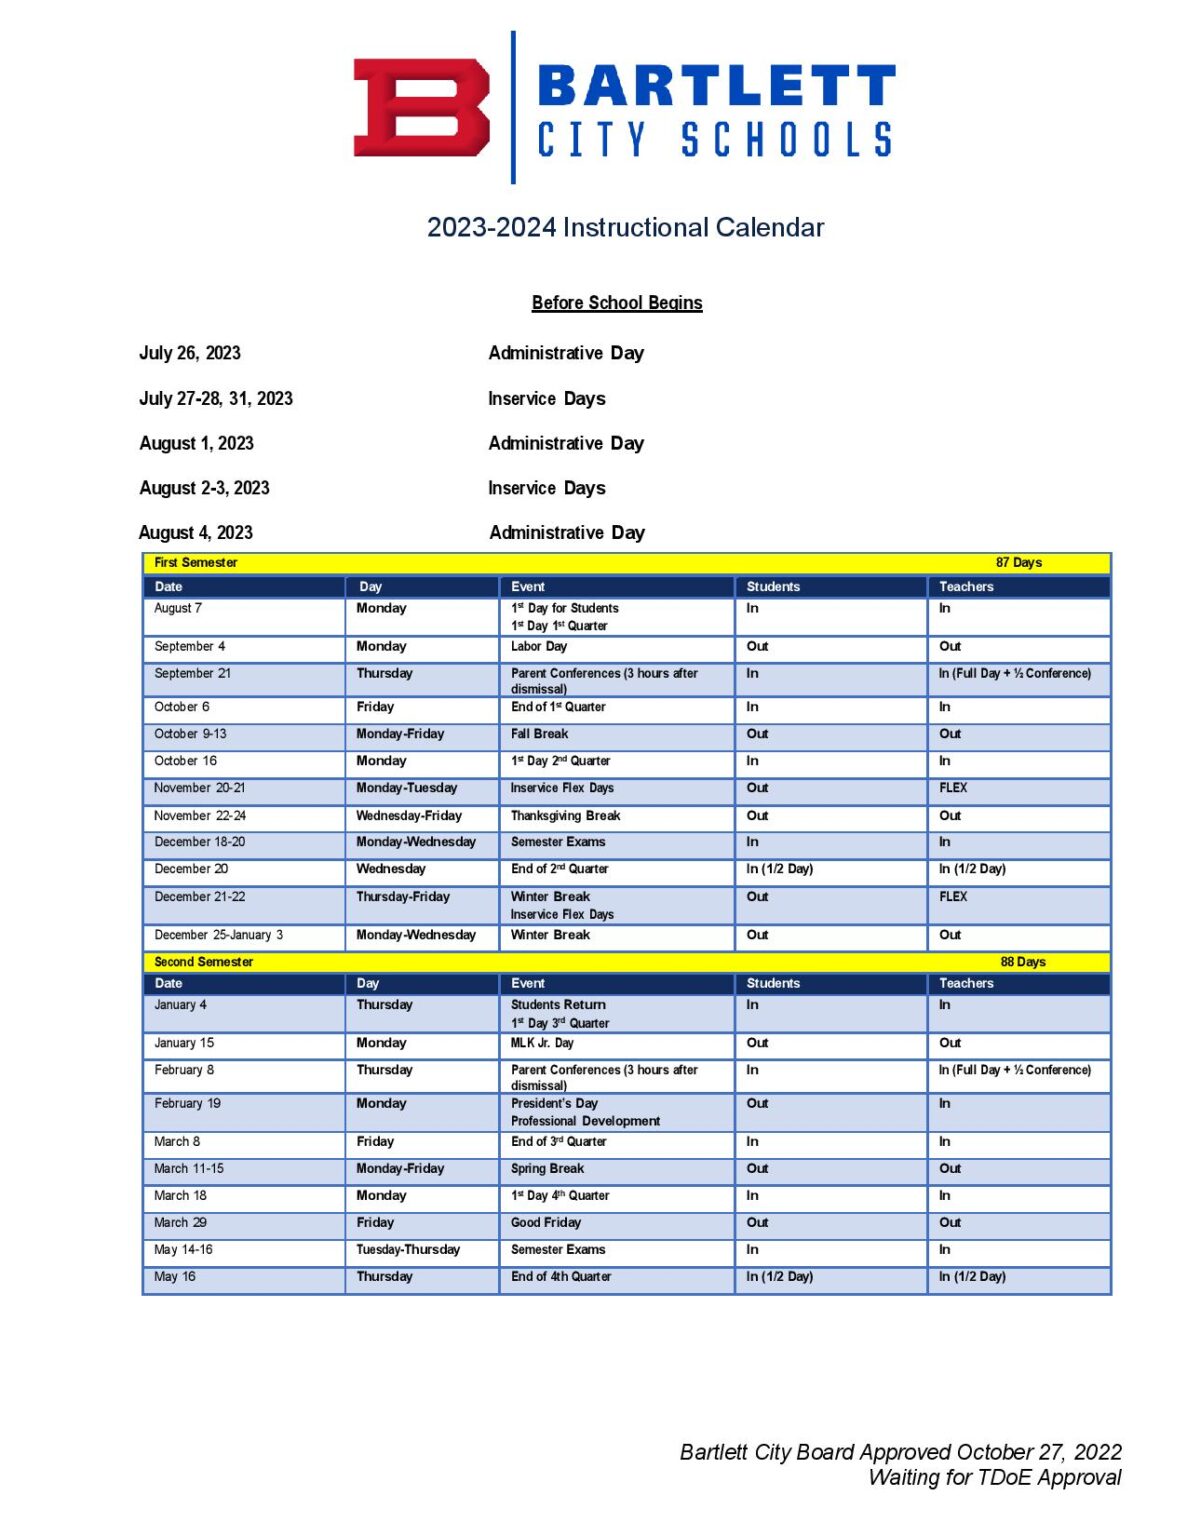 Bartlett City Schools Calendar 20232024 in PDF